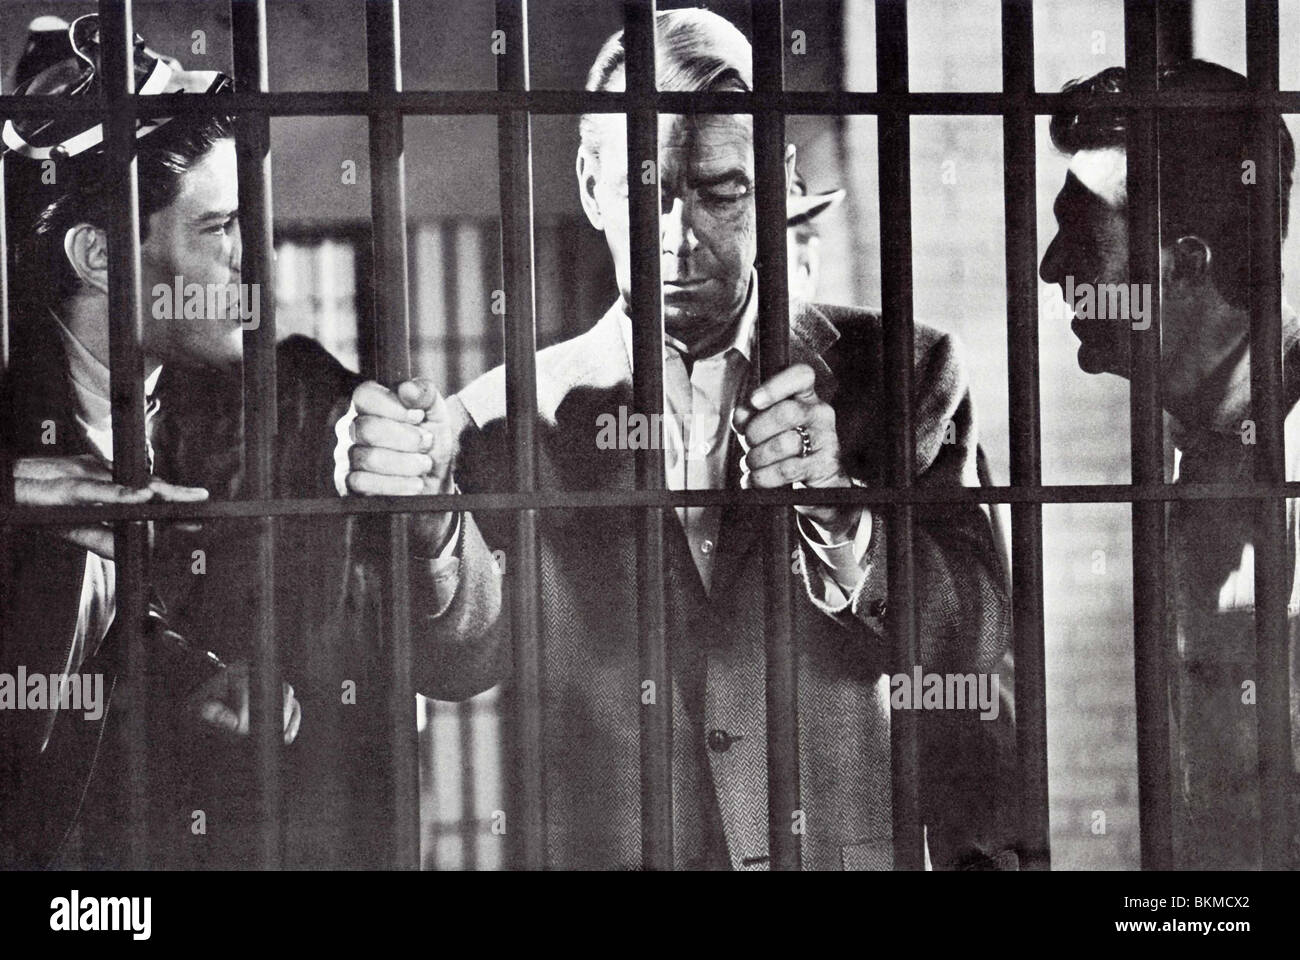 13 WEST STREET (1962) ALAN LADD, PHILLIP LEACOCK (DIR) 13WS 002FOH Stock Photo